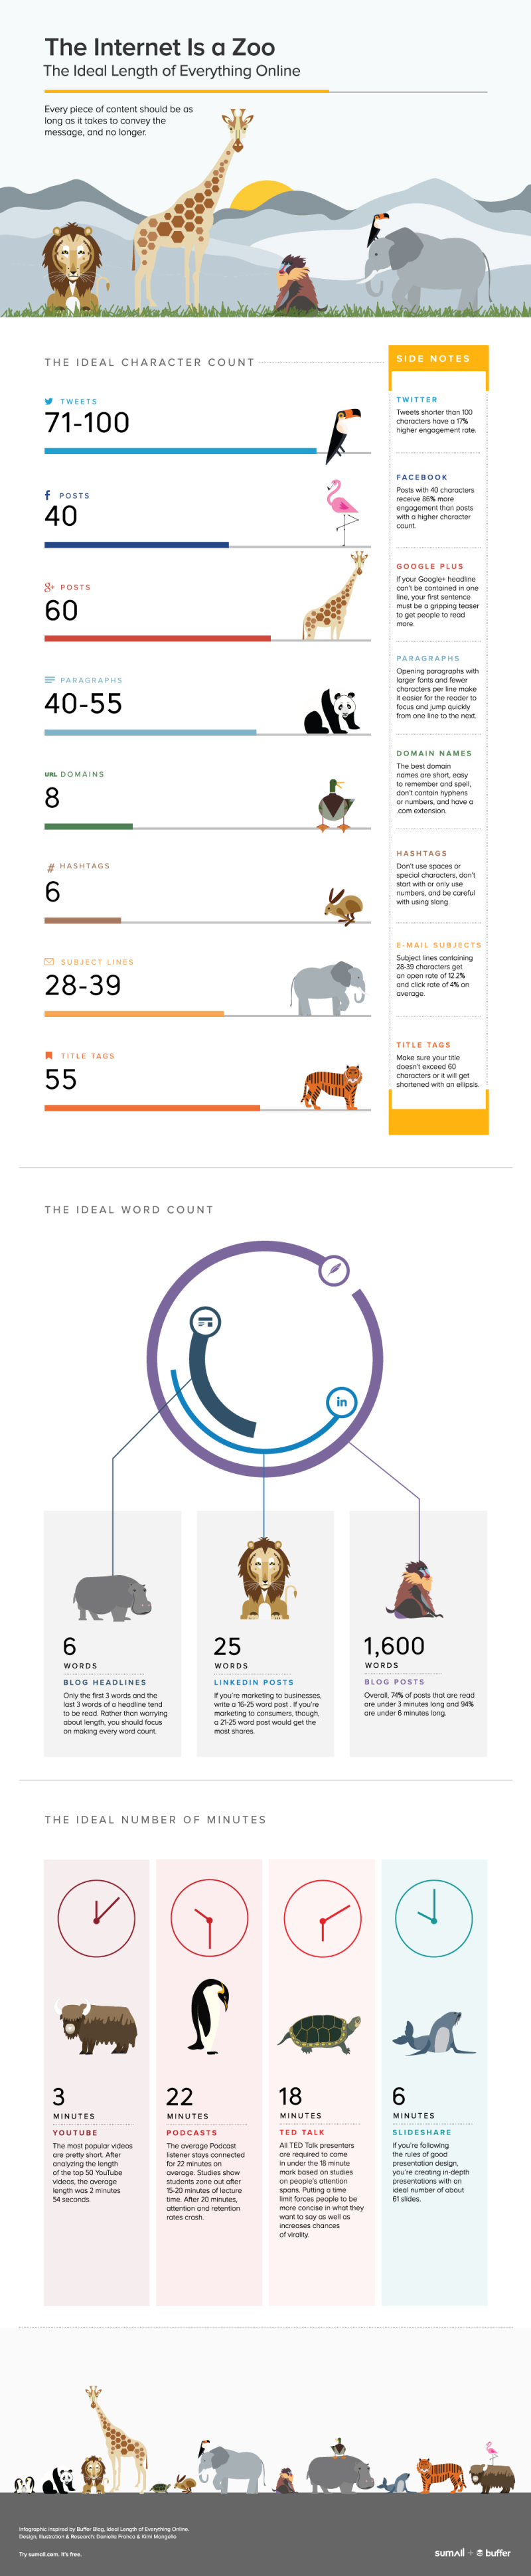 social-media-length-infographic-2014-SumAll-Buffer